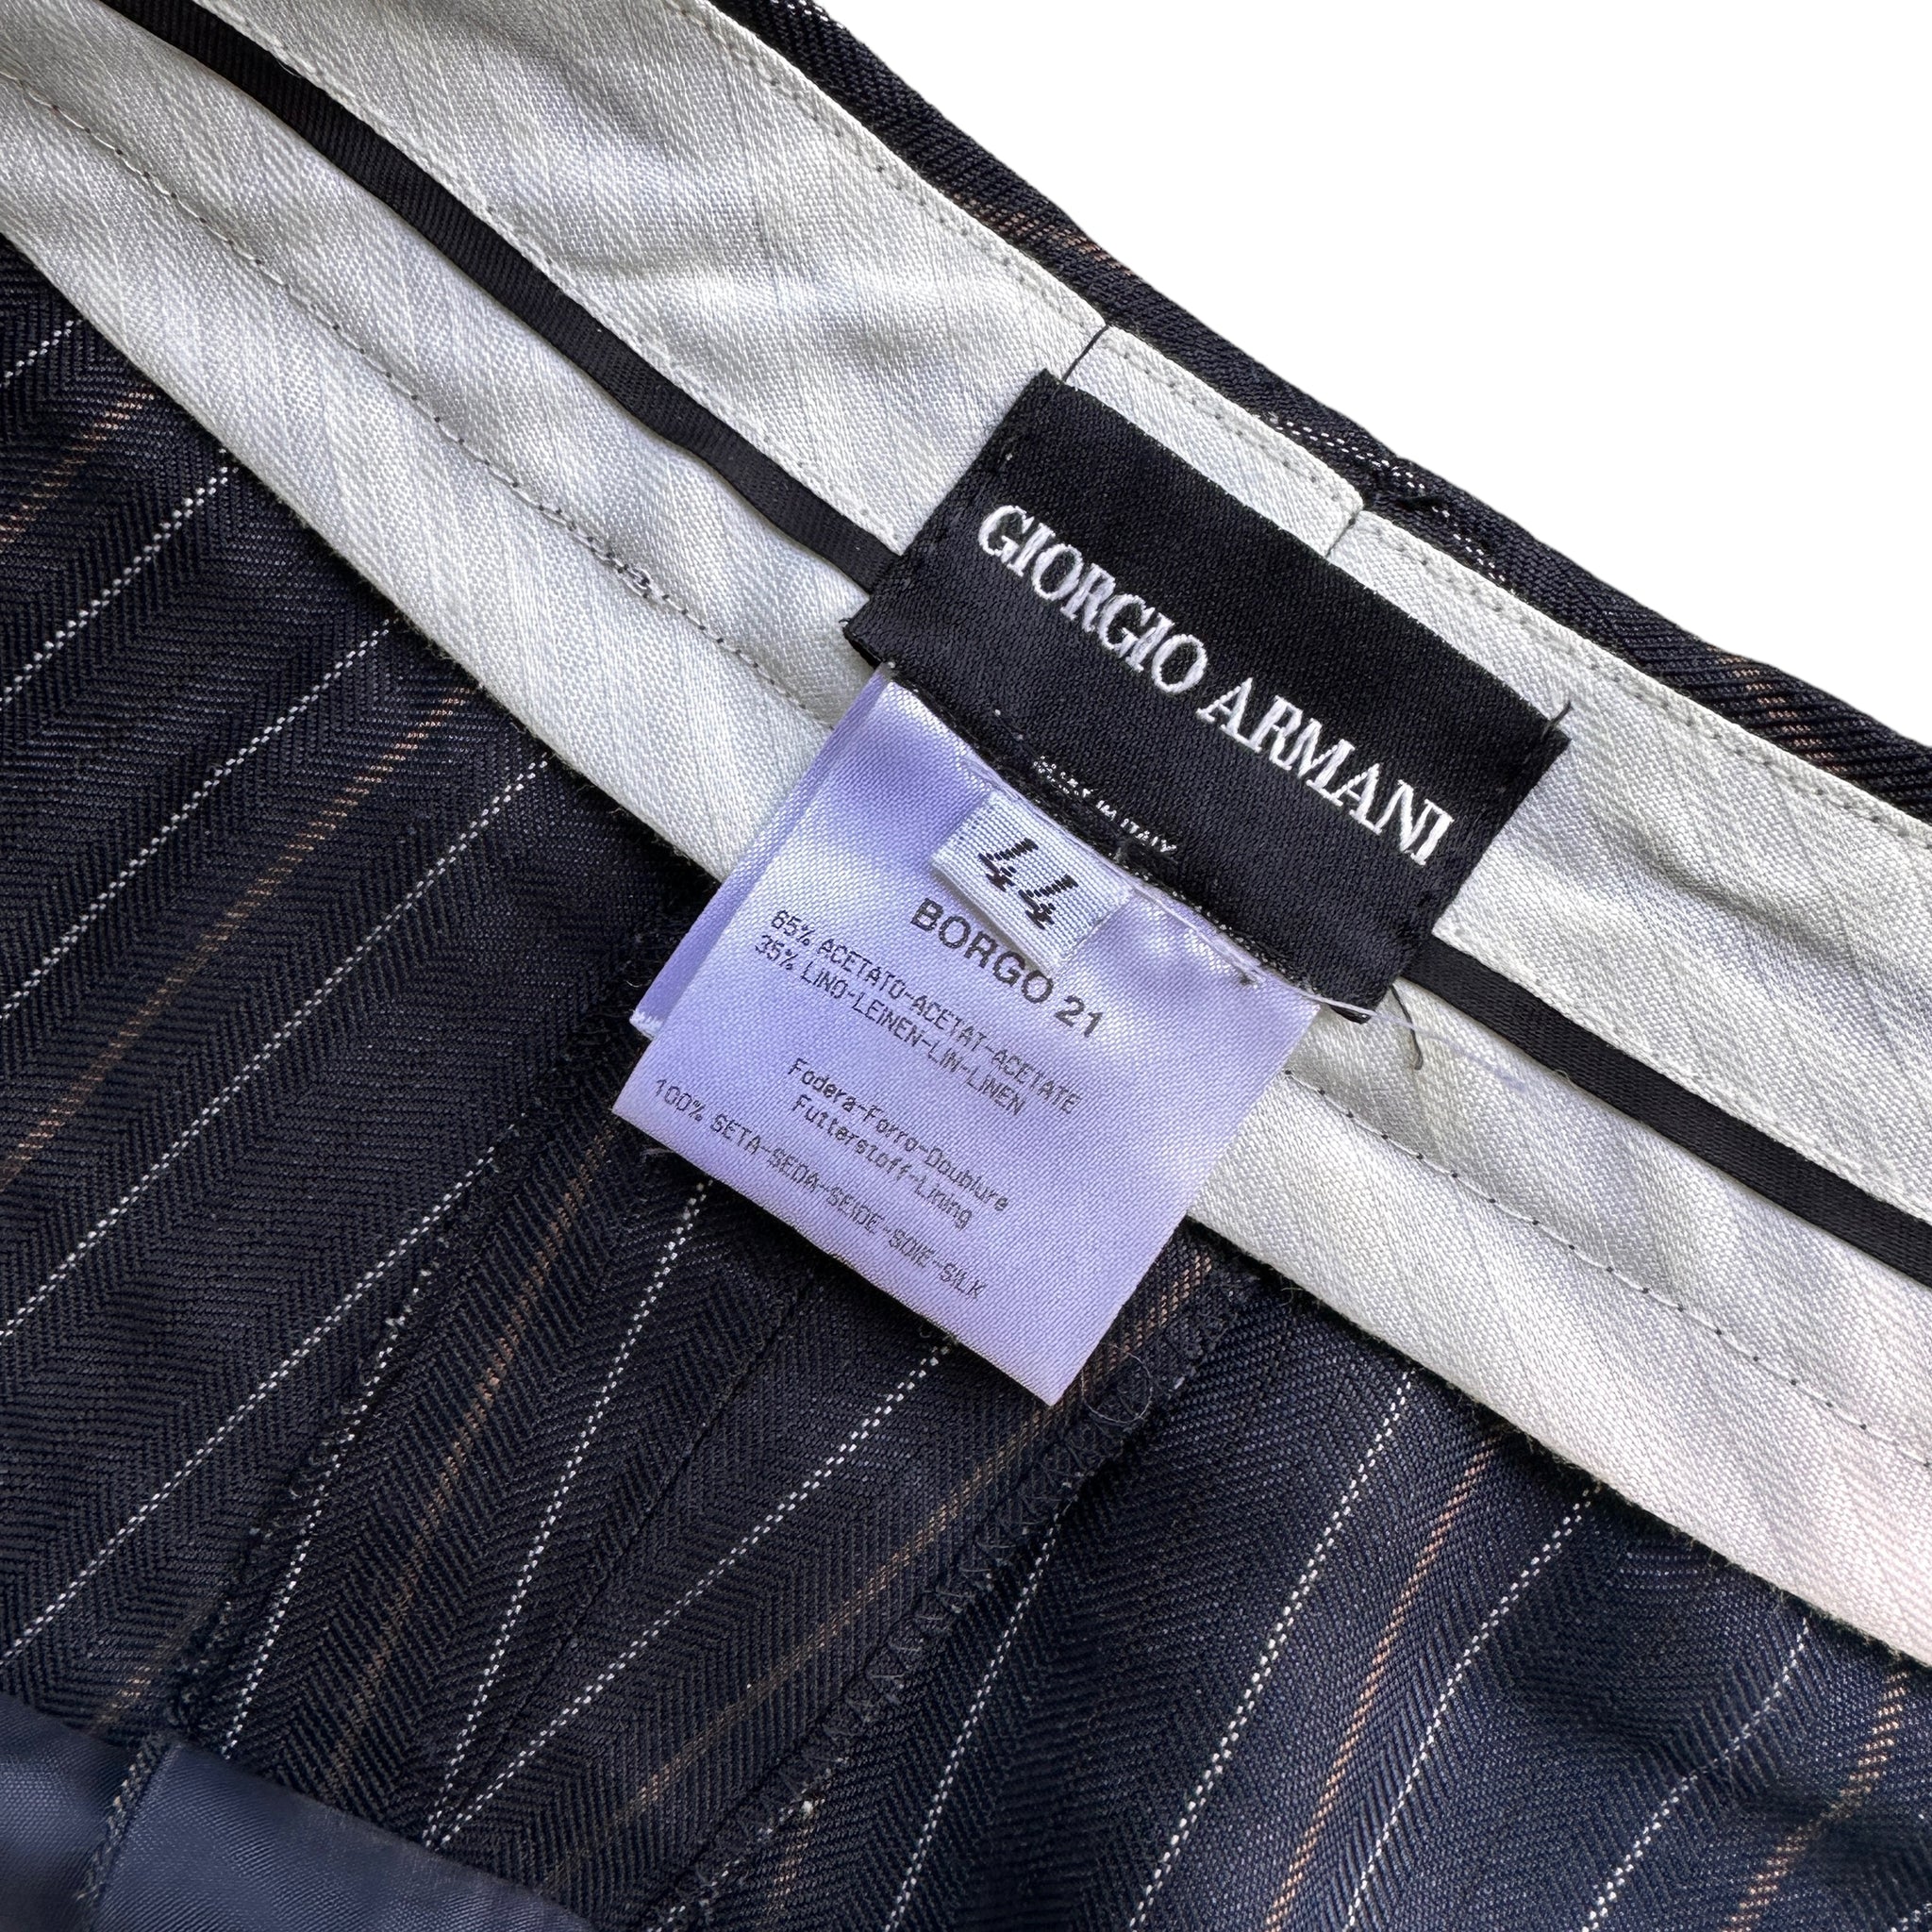 Giorgio Armani  women’s big flowy linen blend slacks  Made in italy🇮🇹   32/32